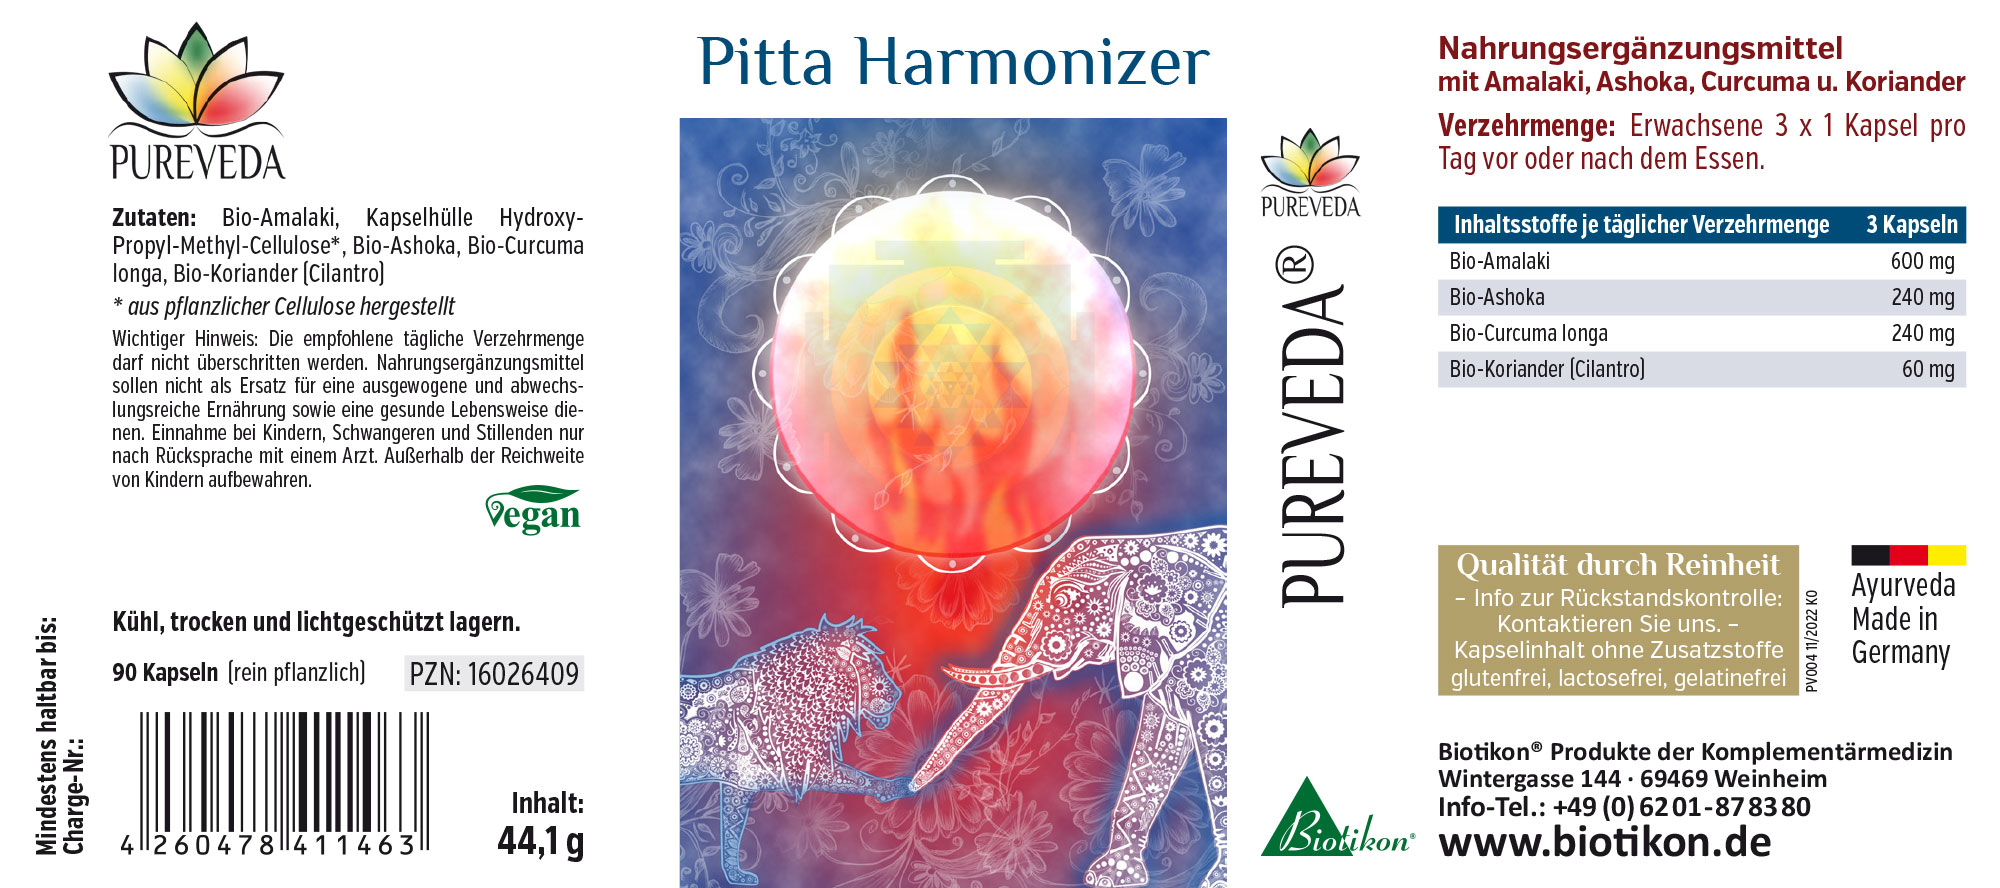 Starter + Pitta Harmonizer